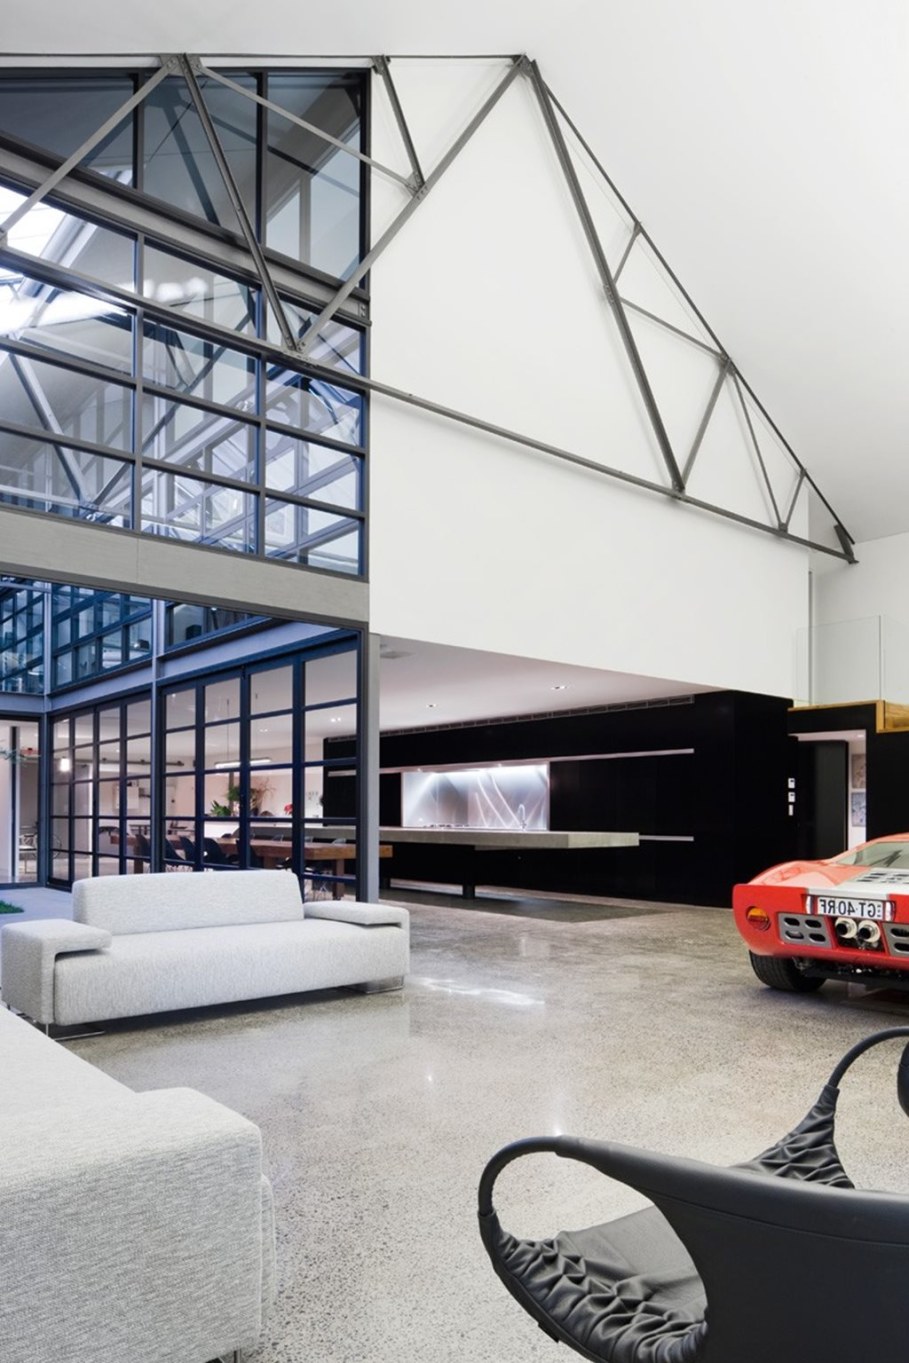 Grand loft house in Australia by Corben Architects studio - Red car